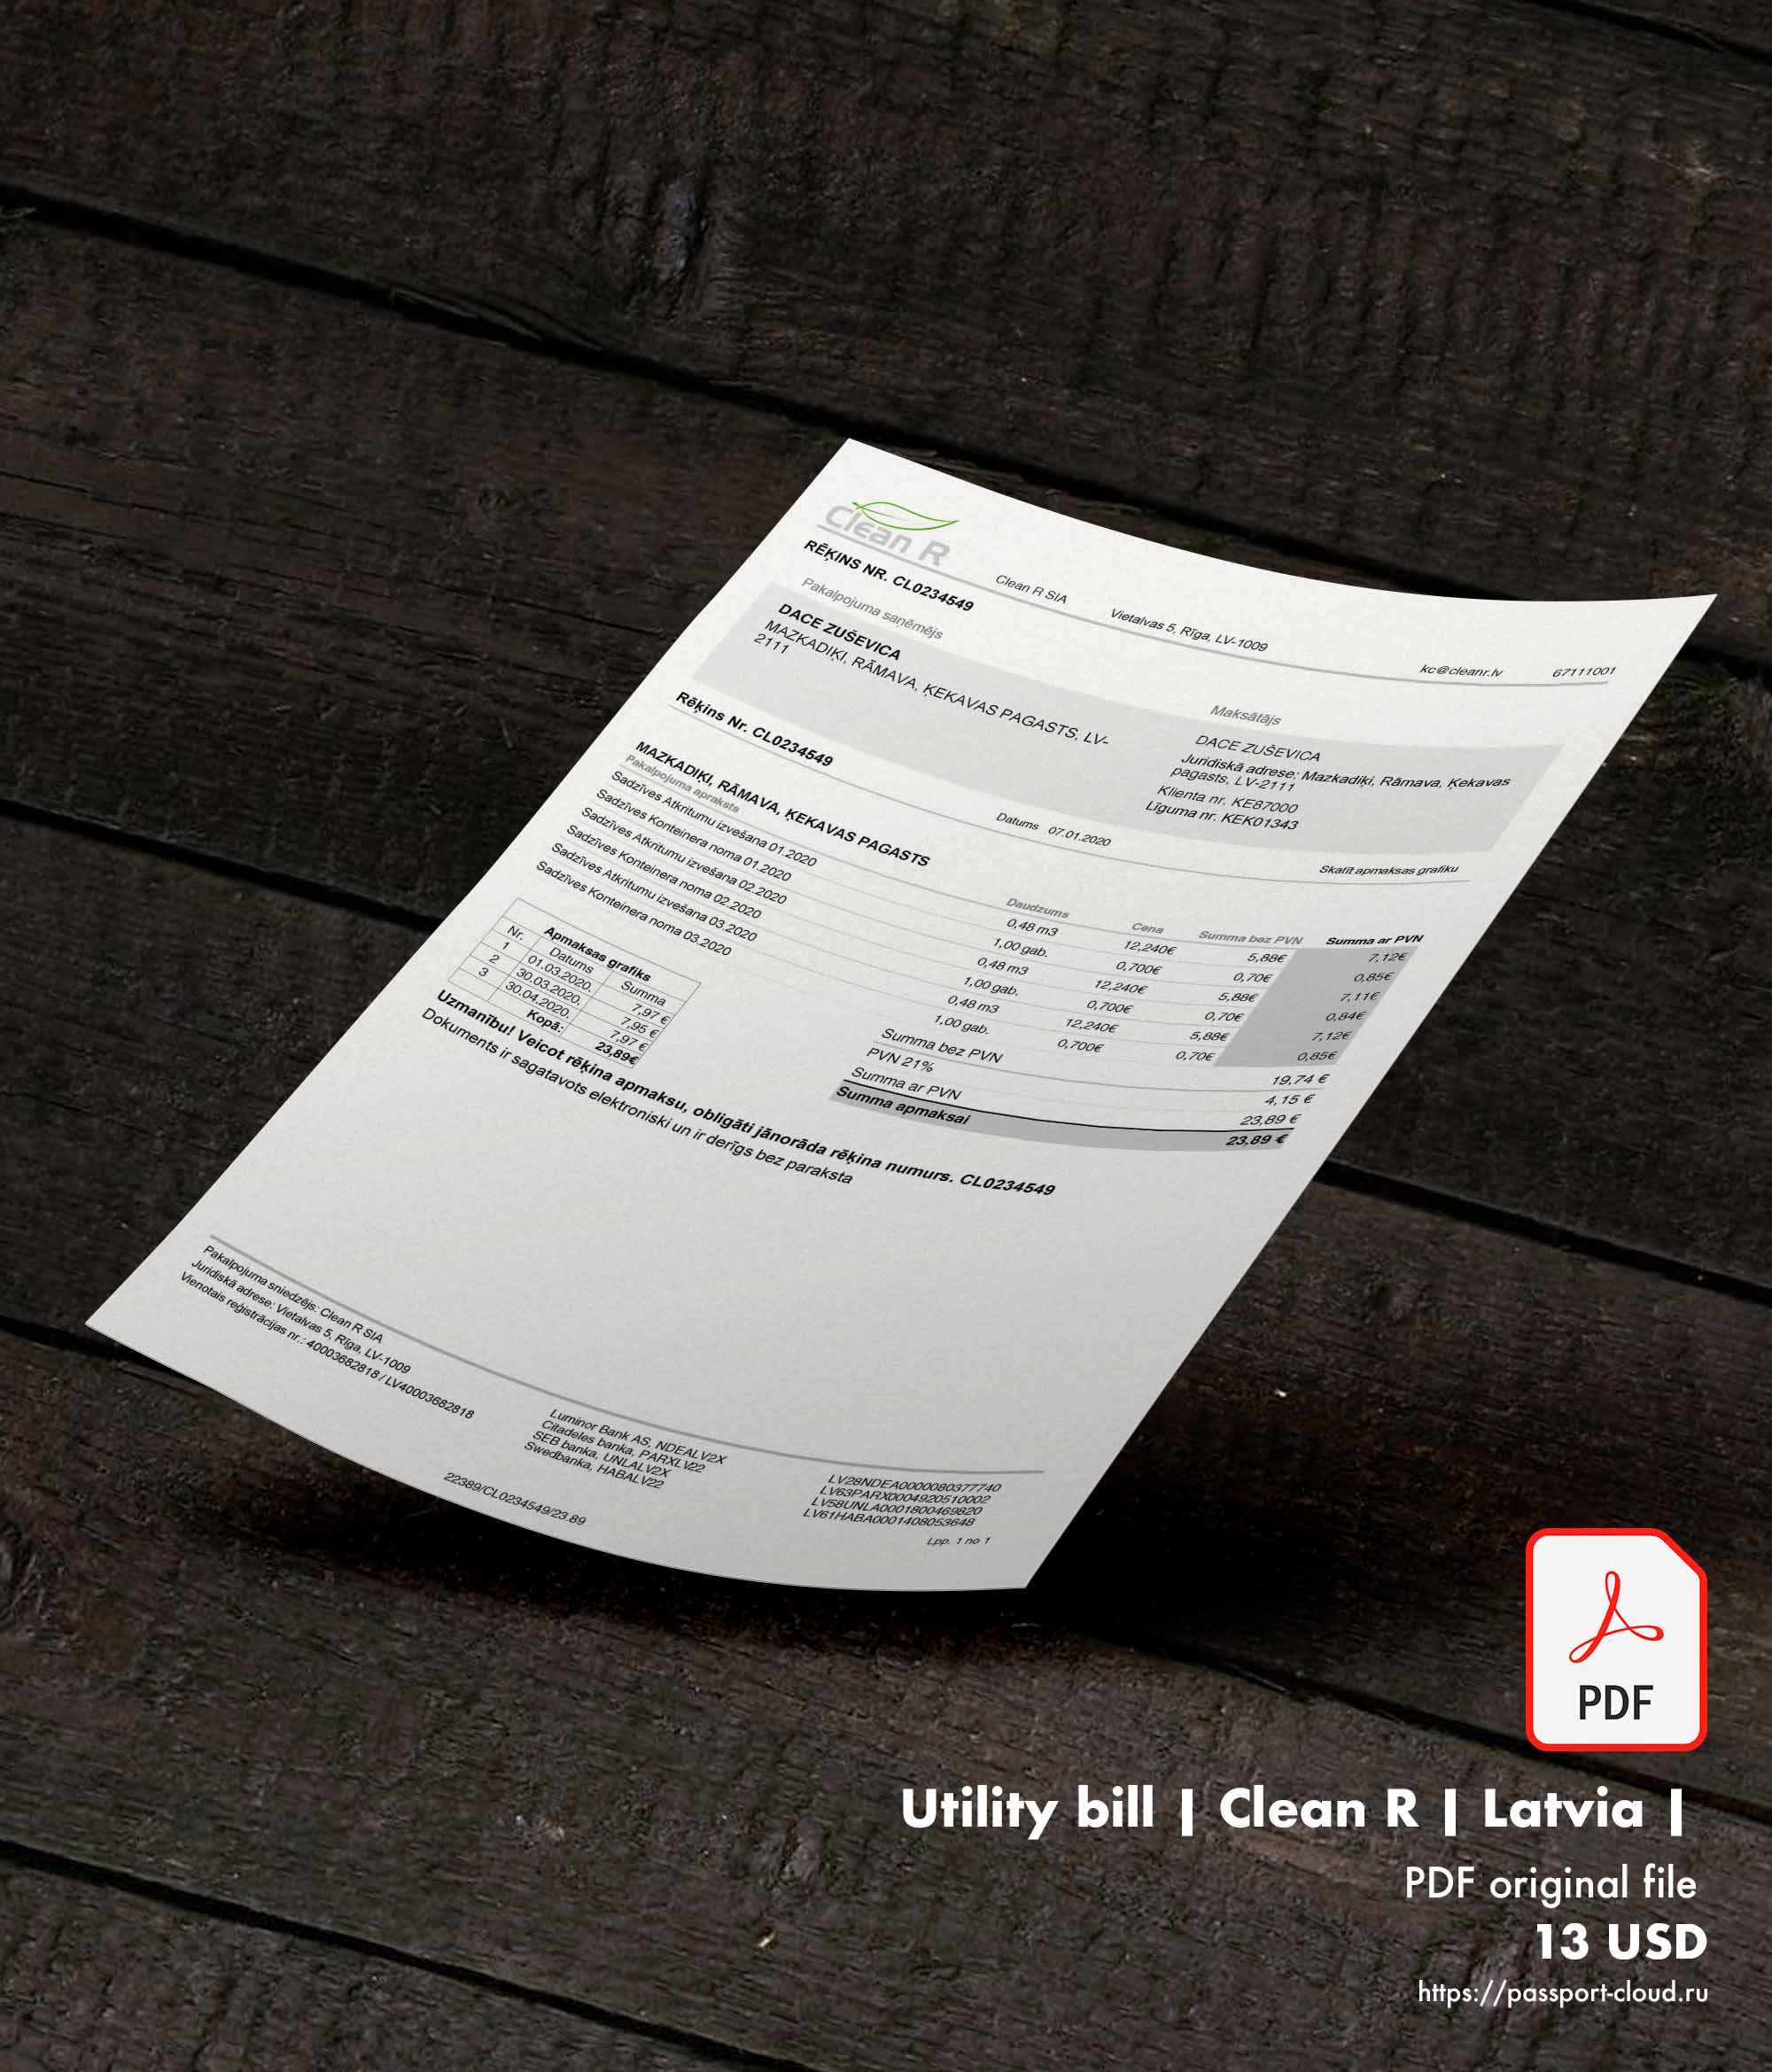 Utility bill | Clean R | Latvia | 1